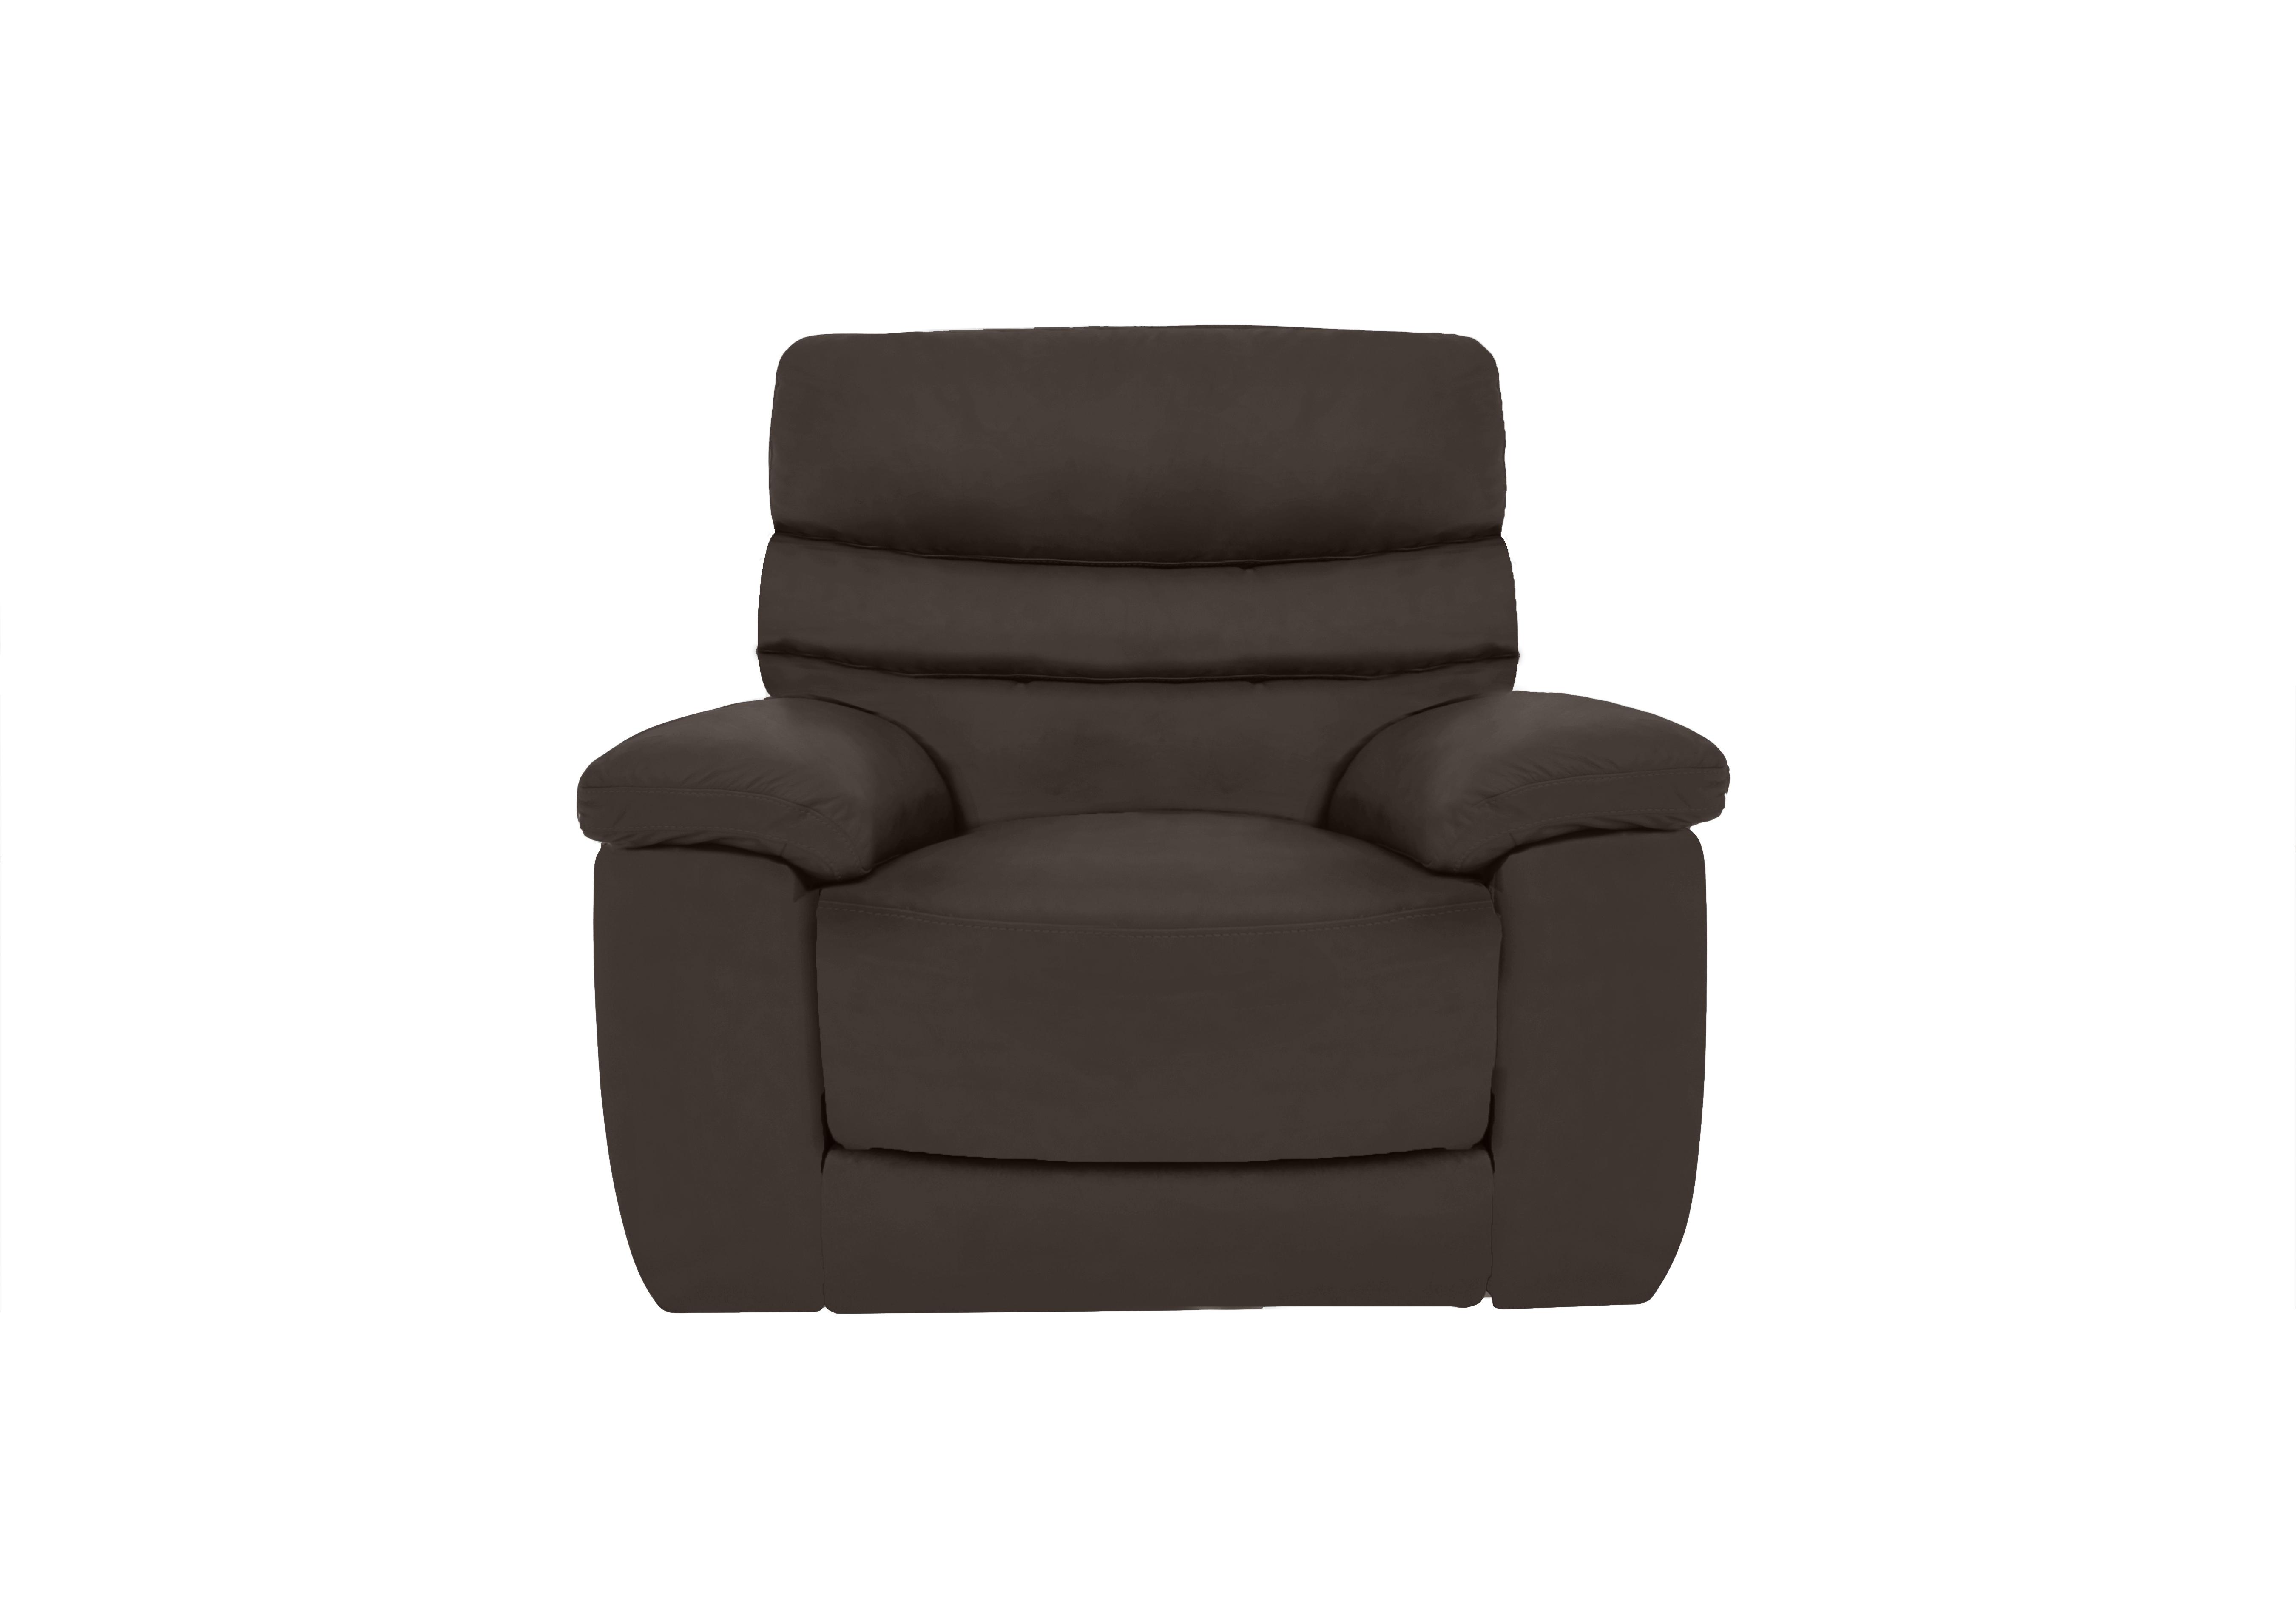 Nimbus Leather Chair in Bx-037c Walnut on Furniture Village